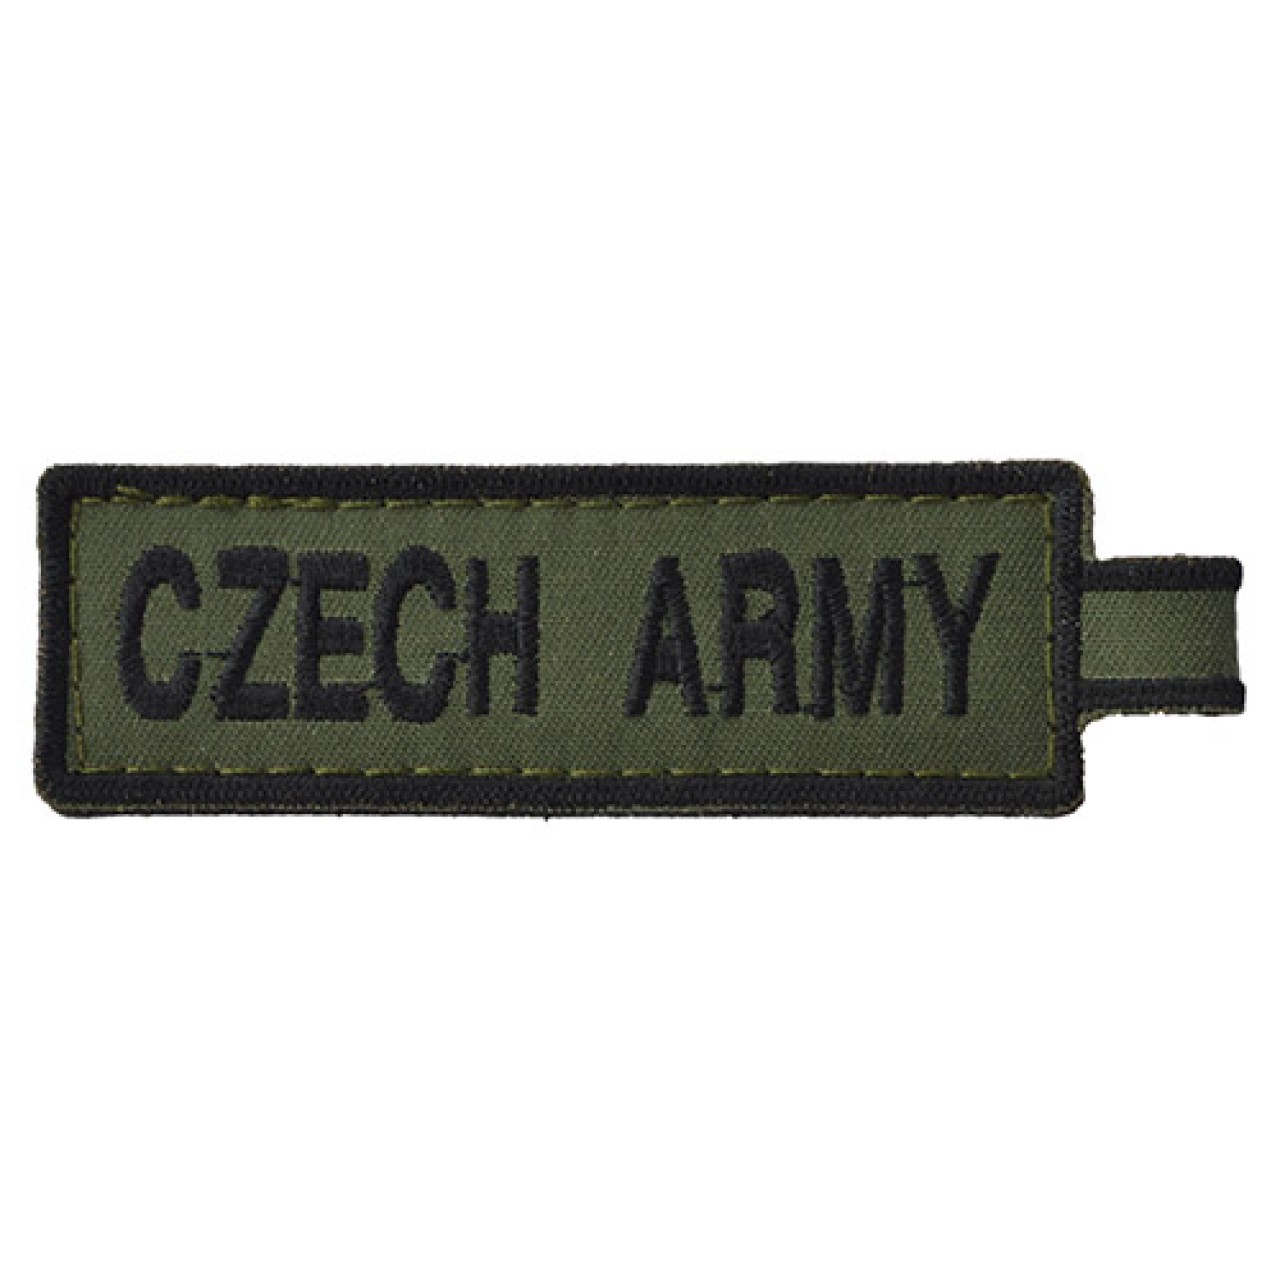 Kľúčenka CZECH ARMY - OLIV